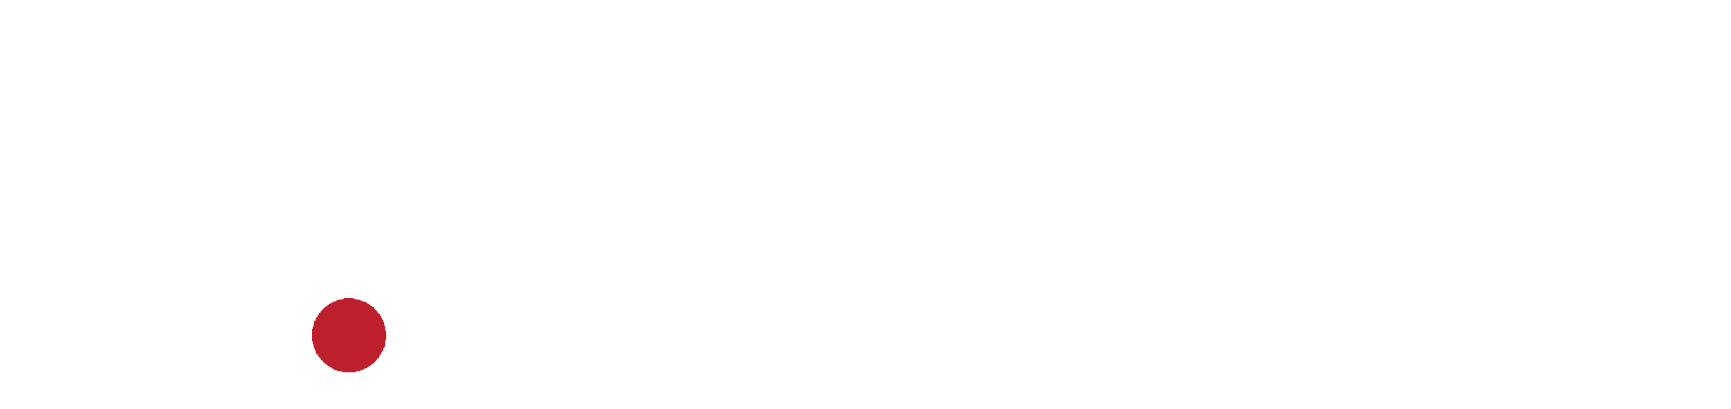 HPS CONNECT